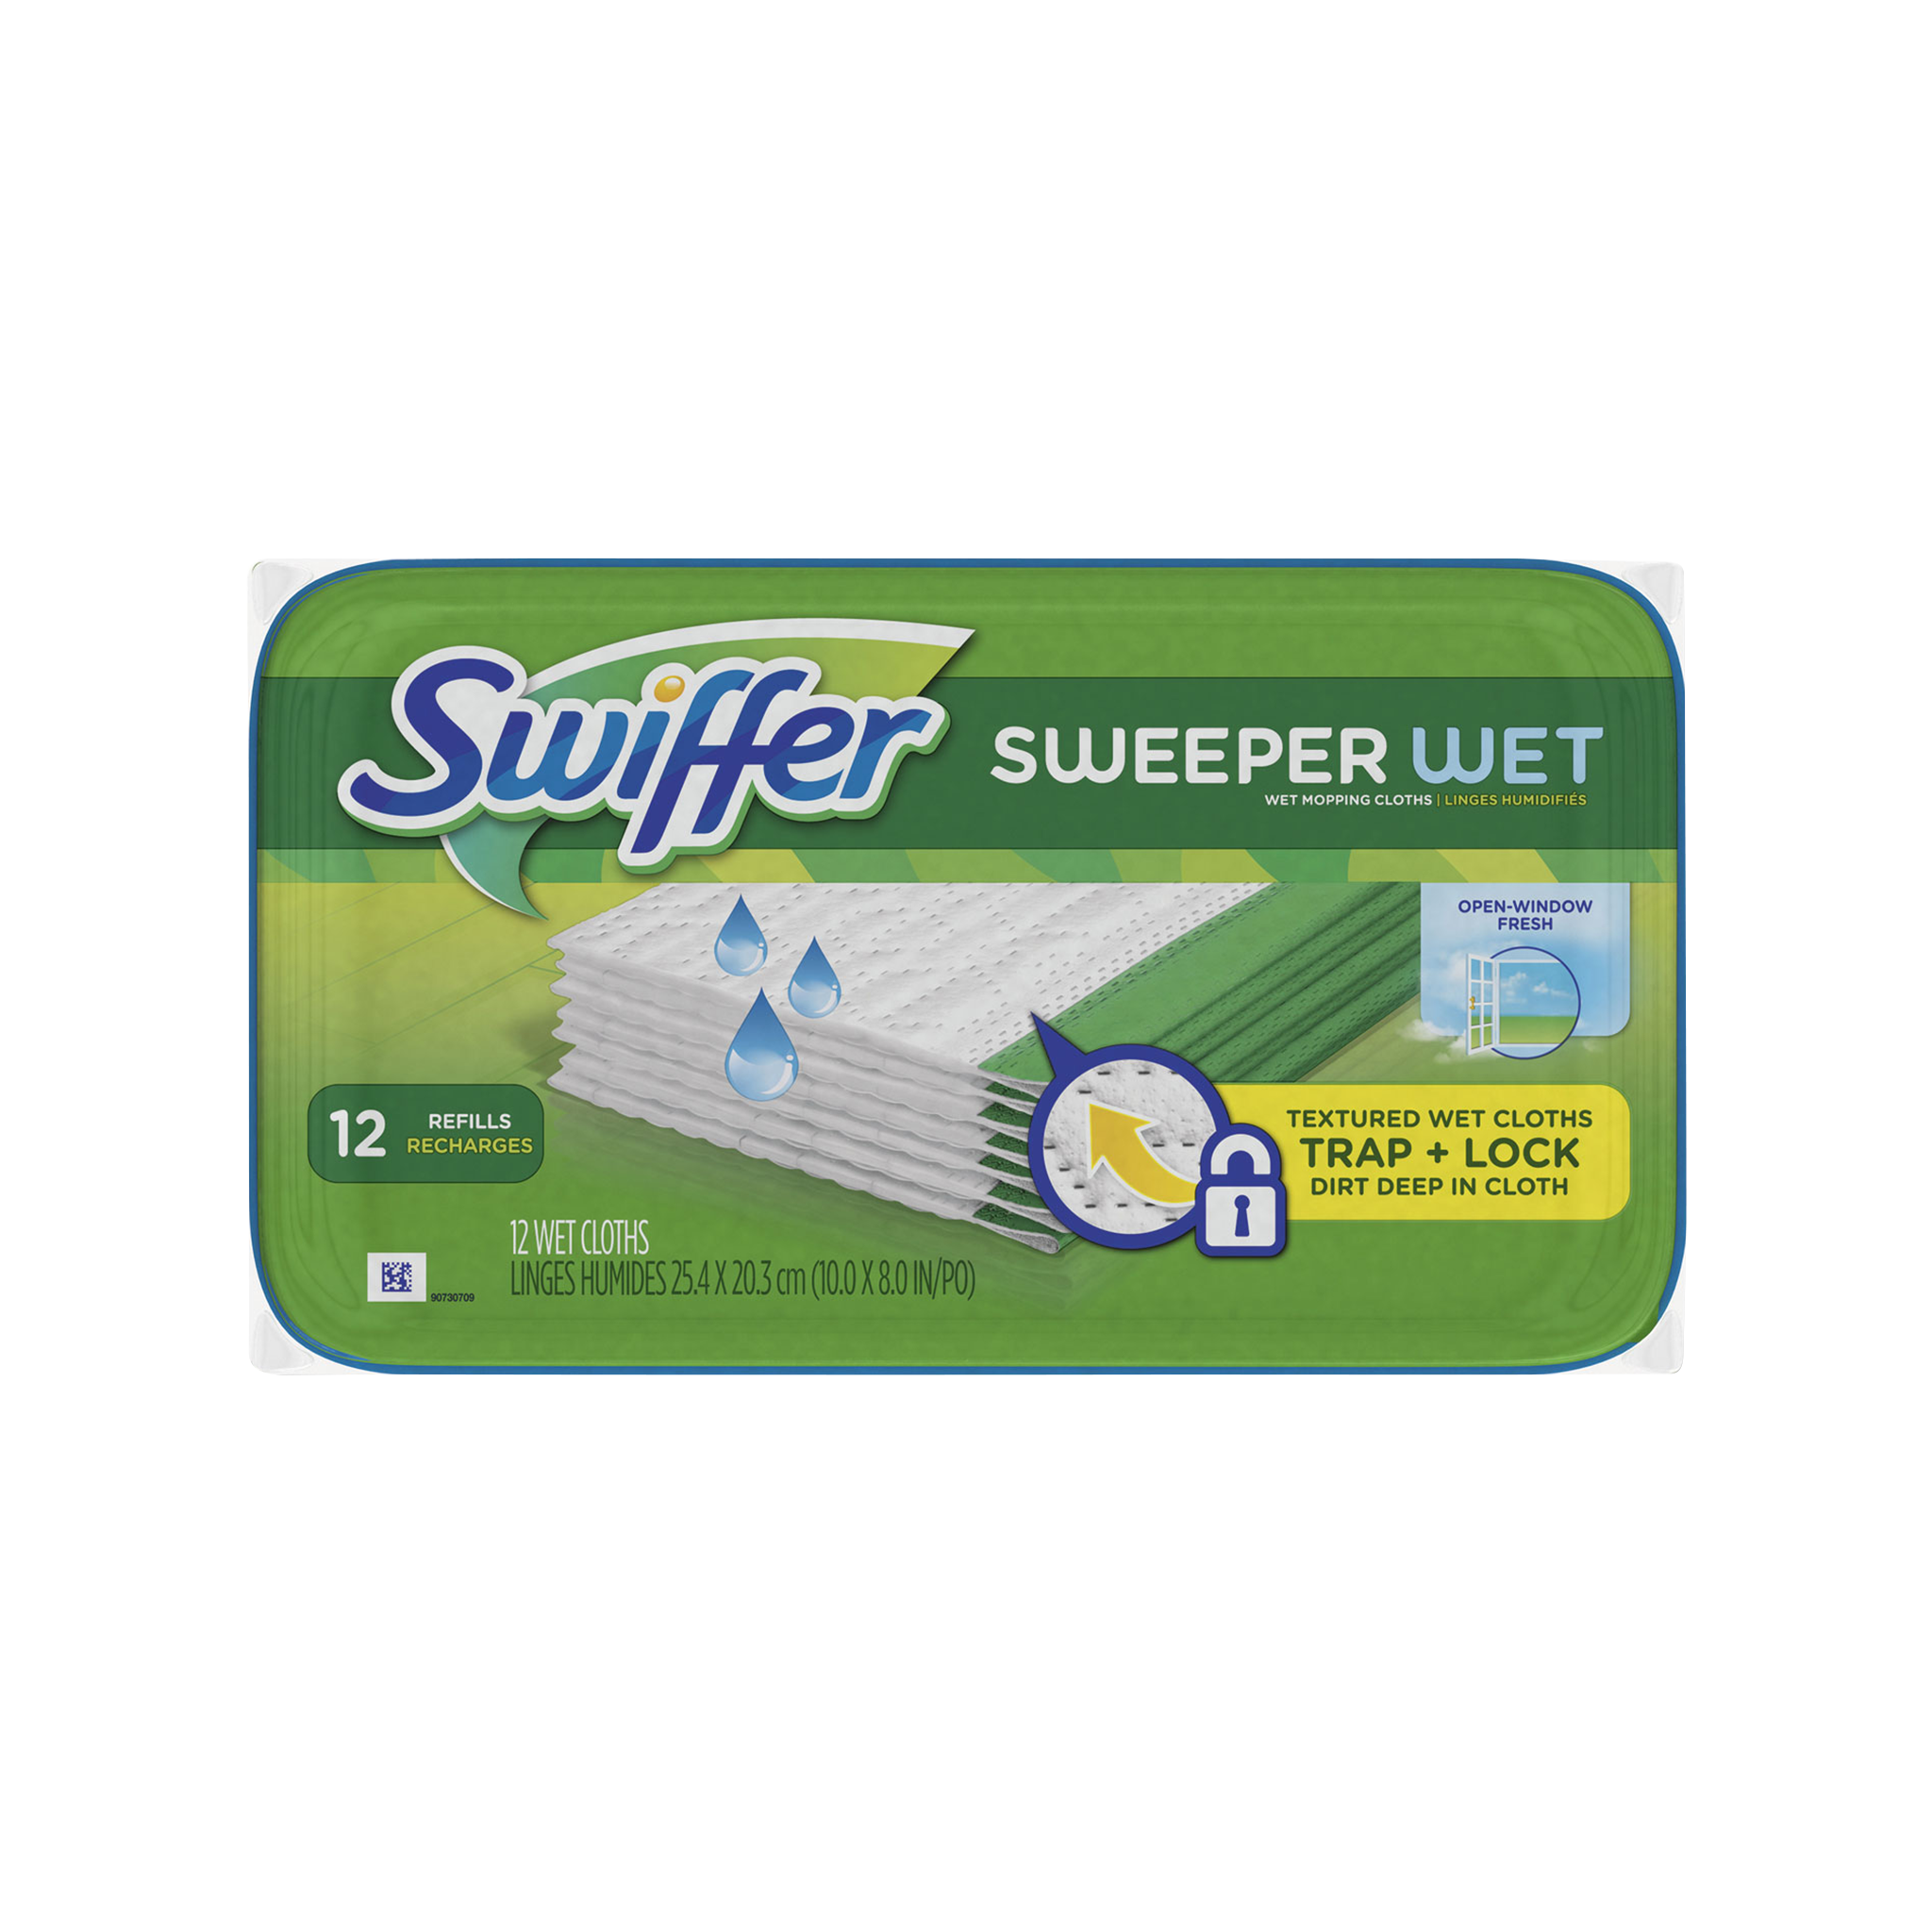 Swiffer Sweeper Wet Refills